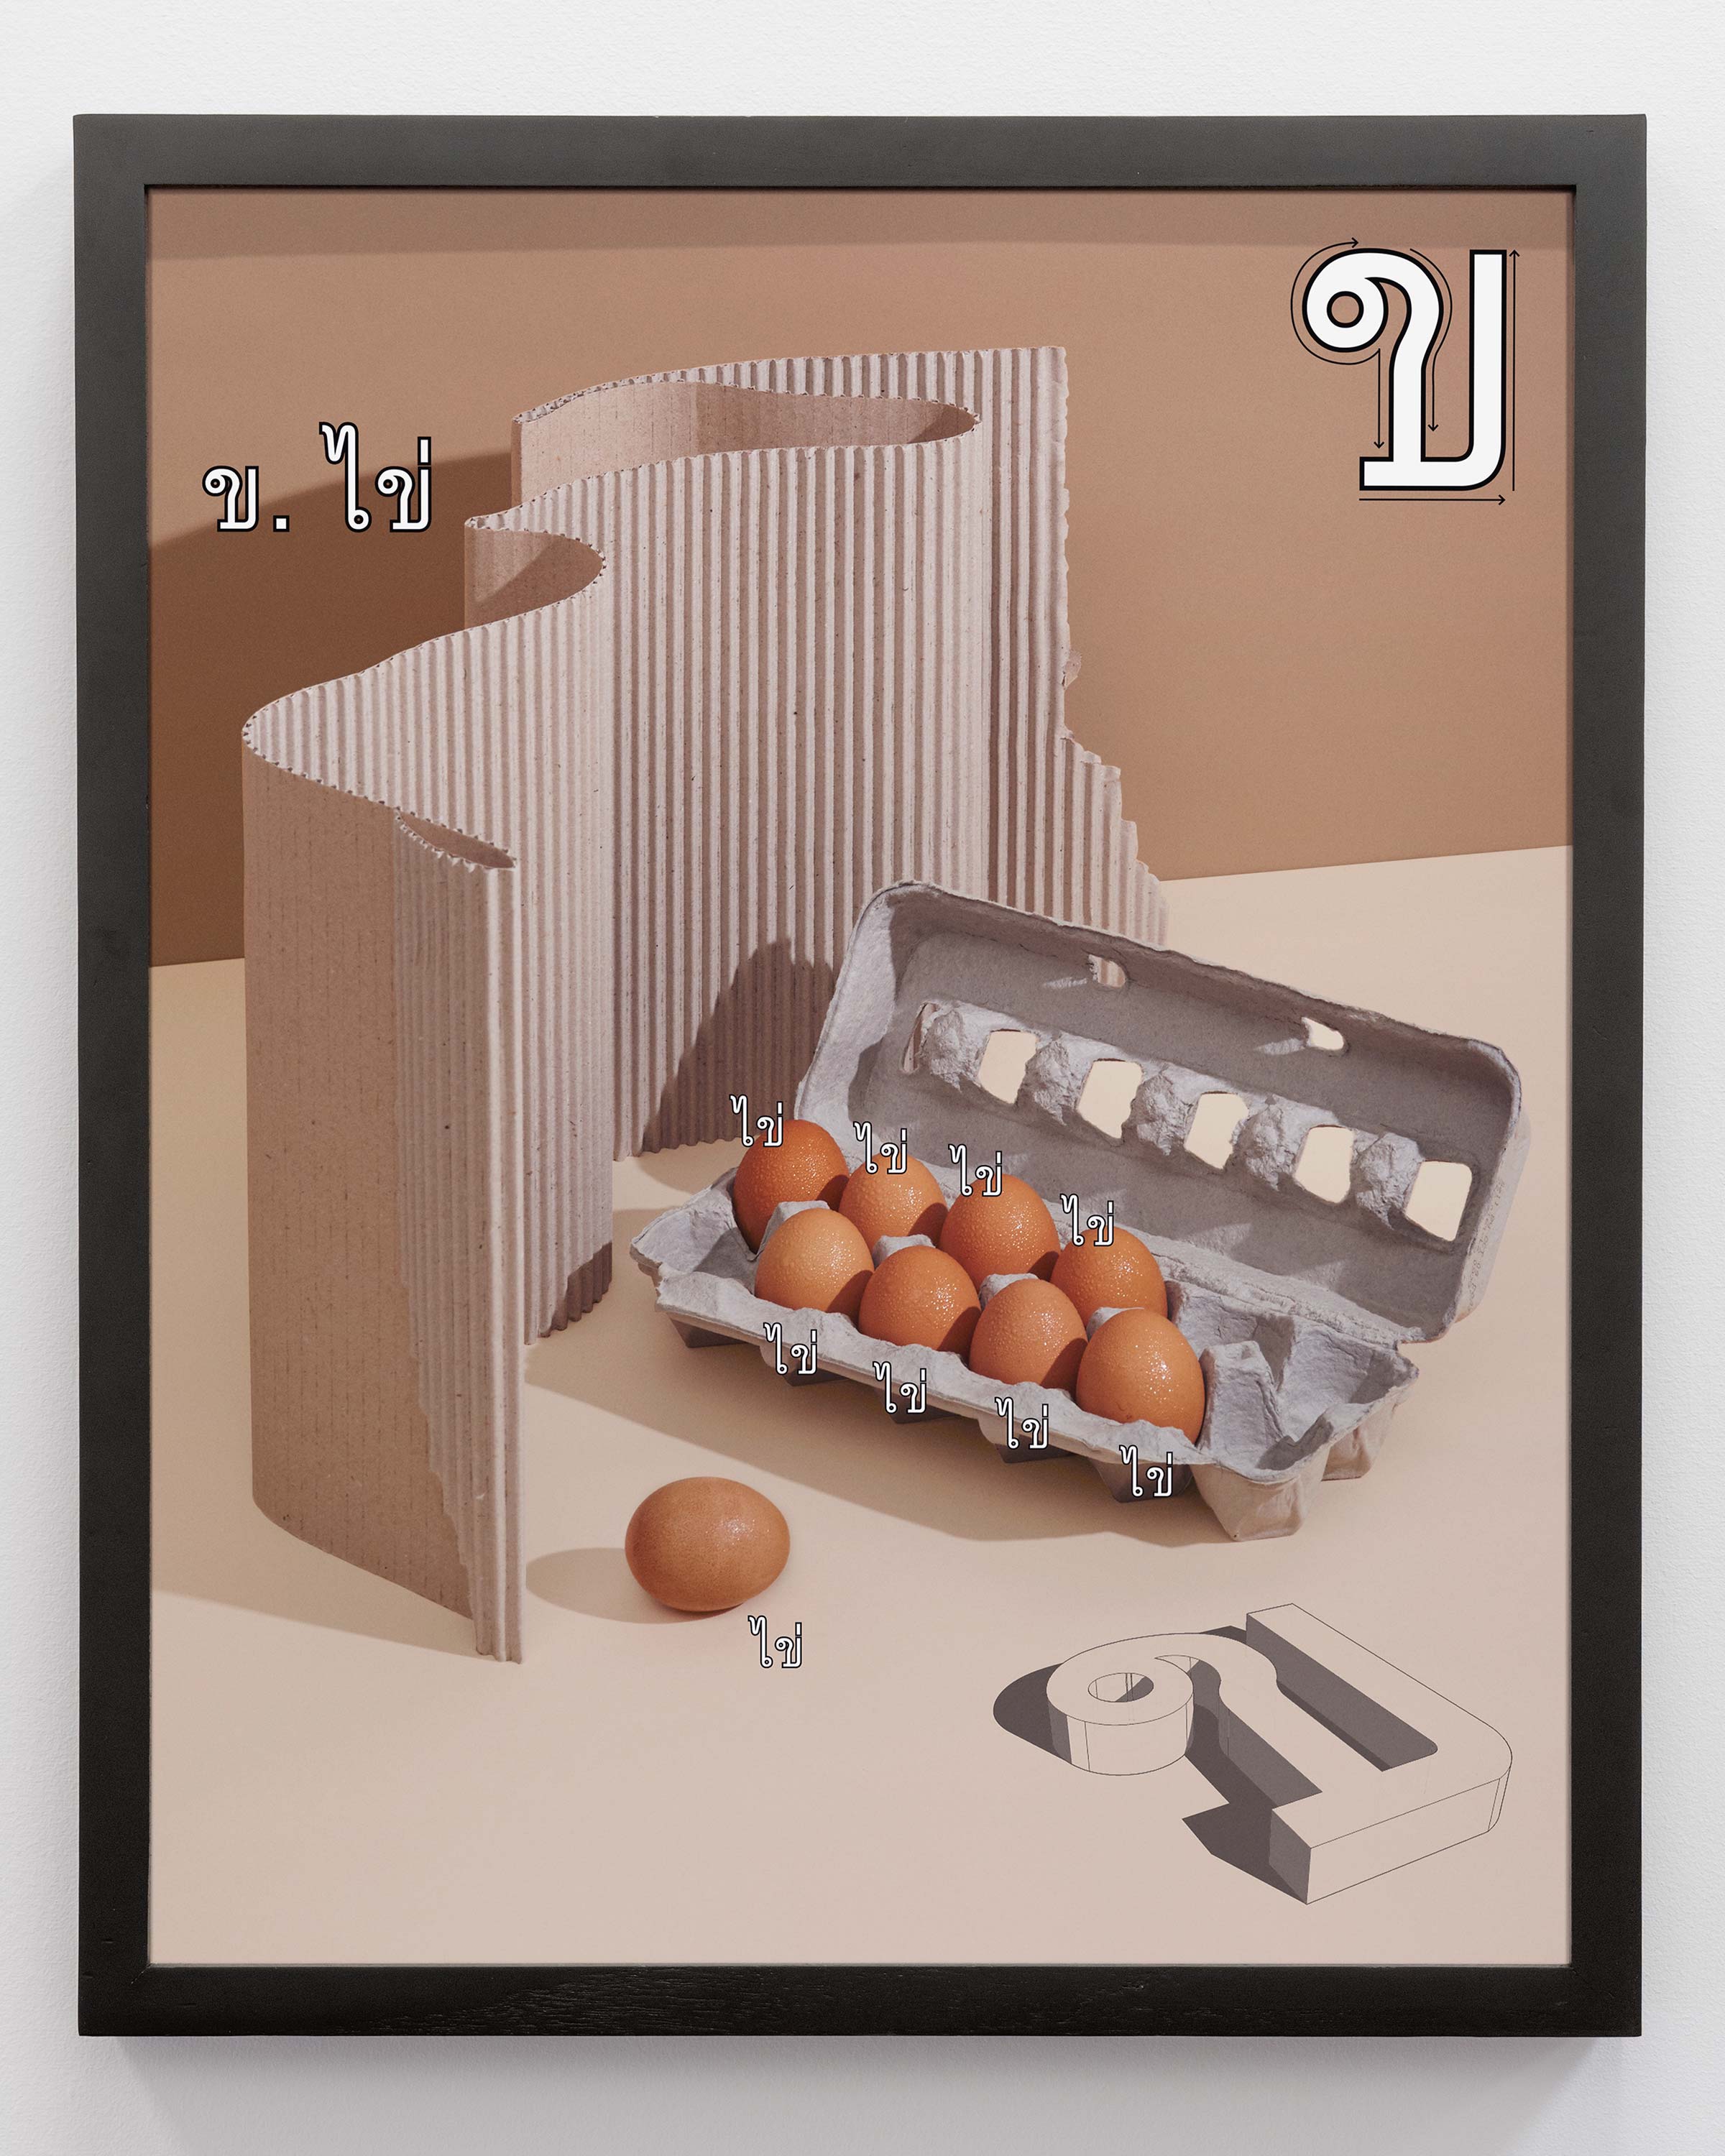 Pete Deevakul<br>Egg (ข. ไข่)<br>2015<br>Archival inkjet print<br>16 x 20 inches (40.6 x 50.8 cm)